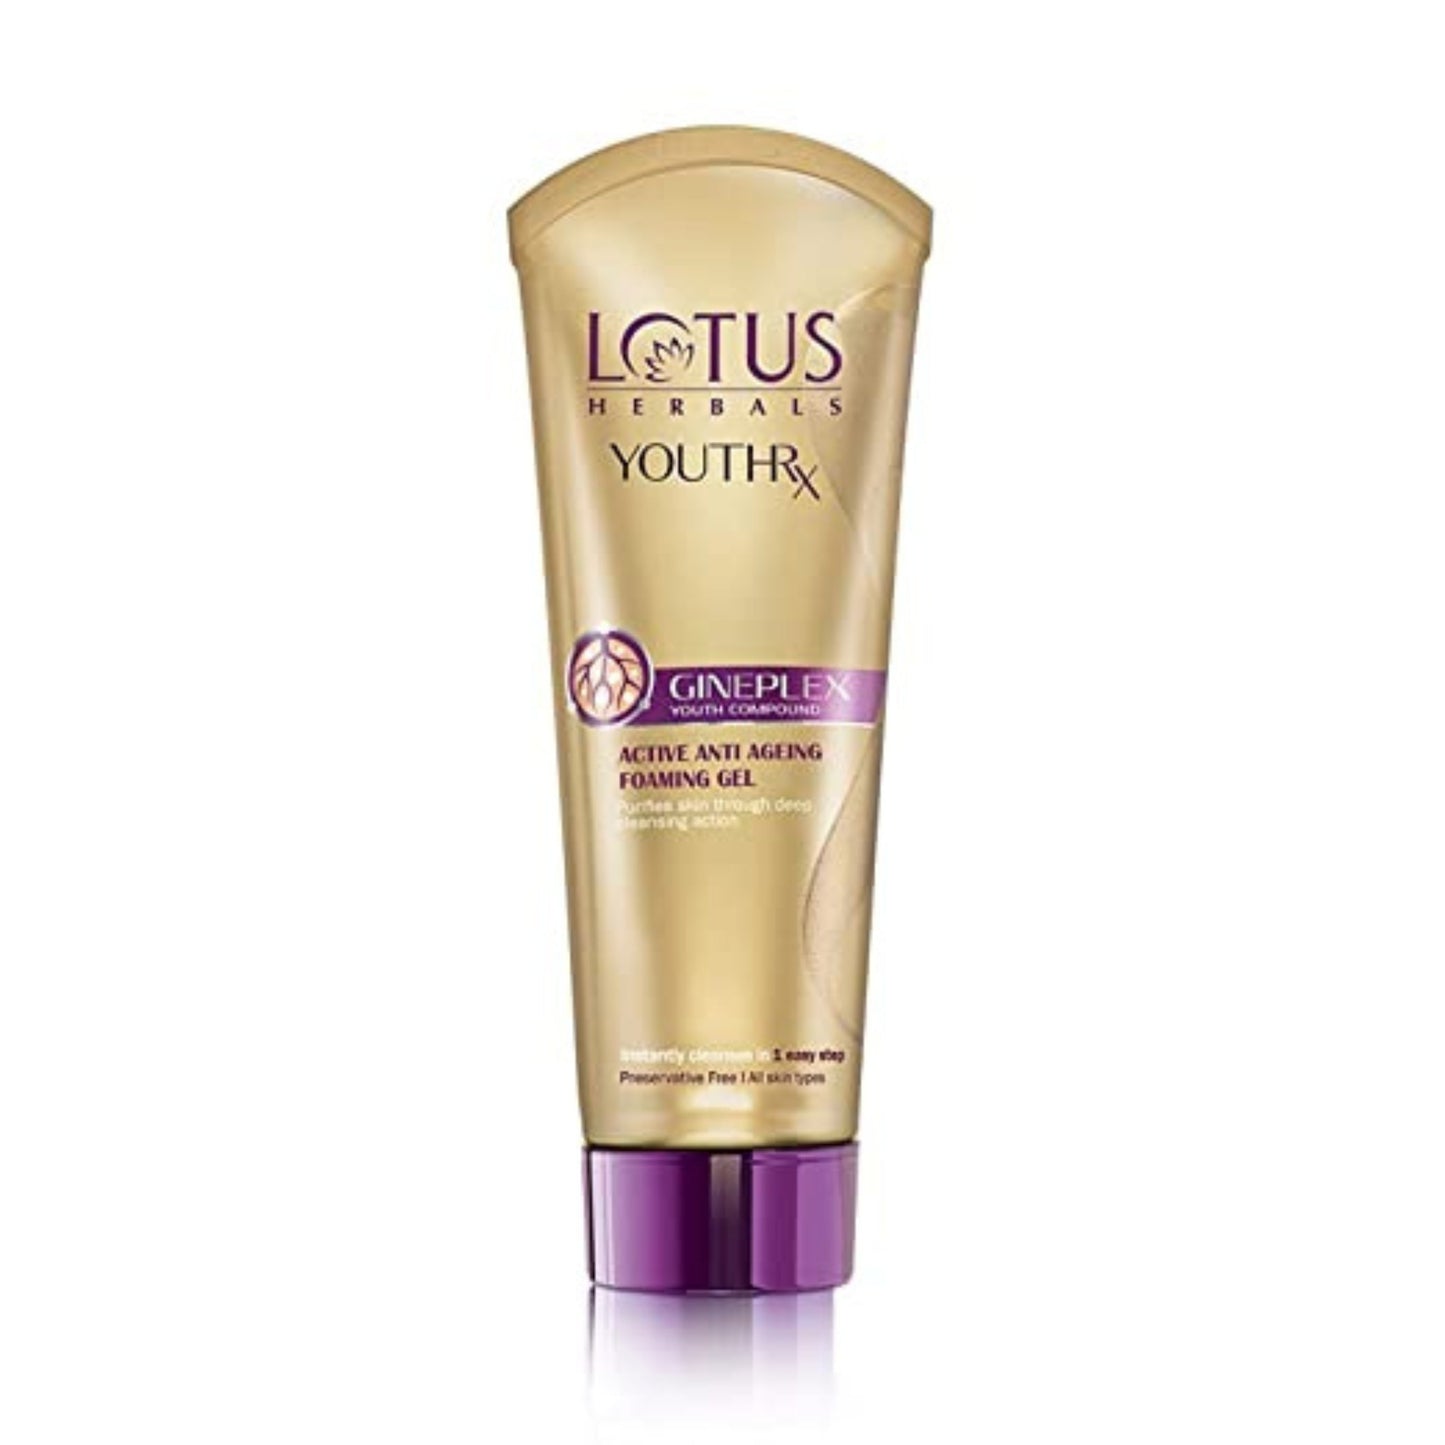 Lotus Herbals YouthRx Active Anti Ageing Foaming Gel Face Wash